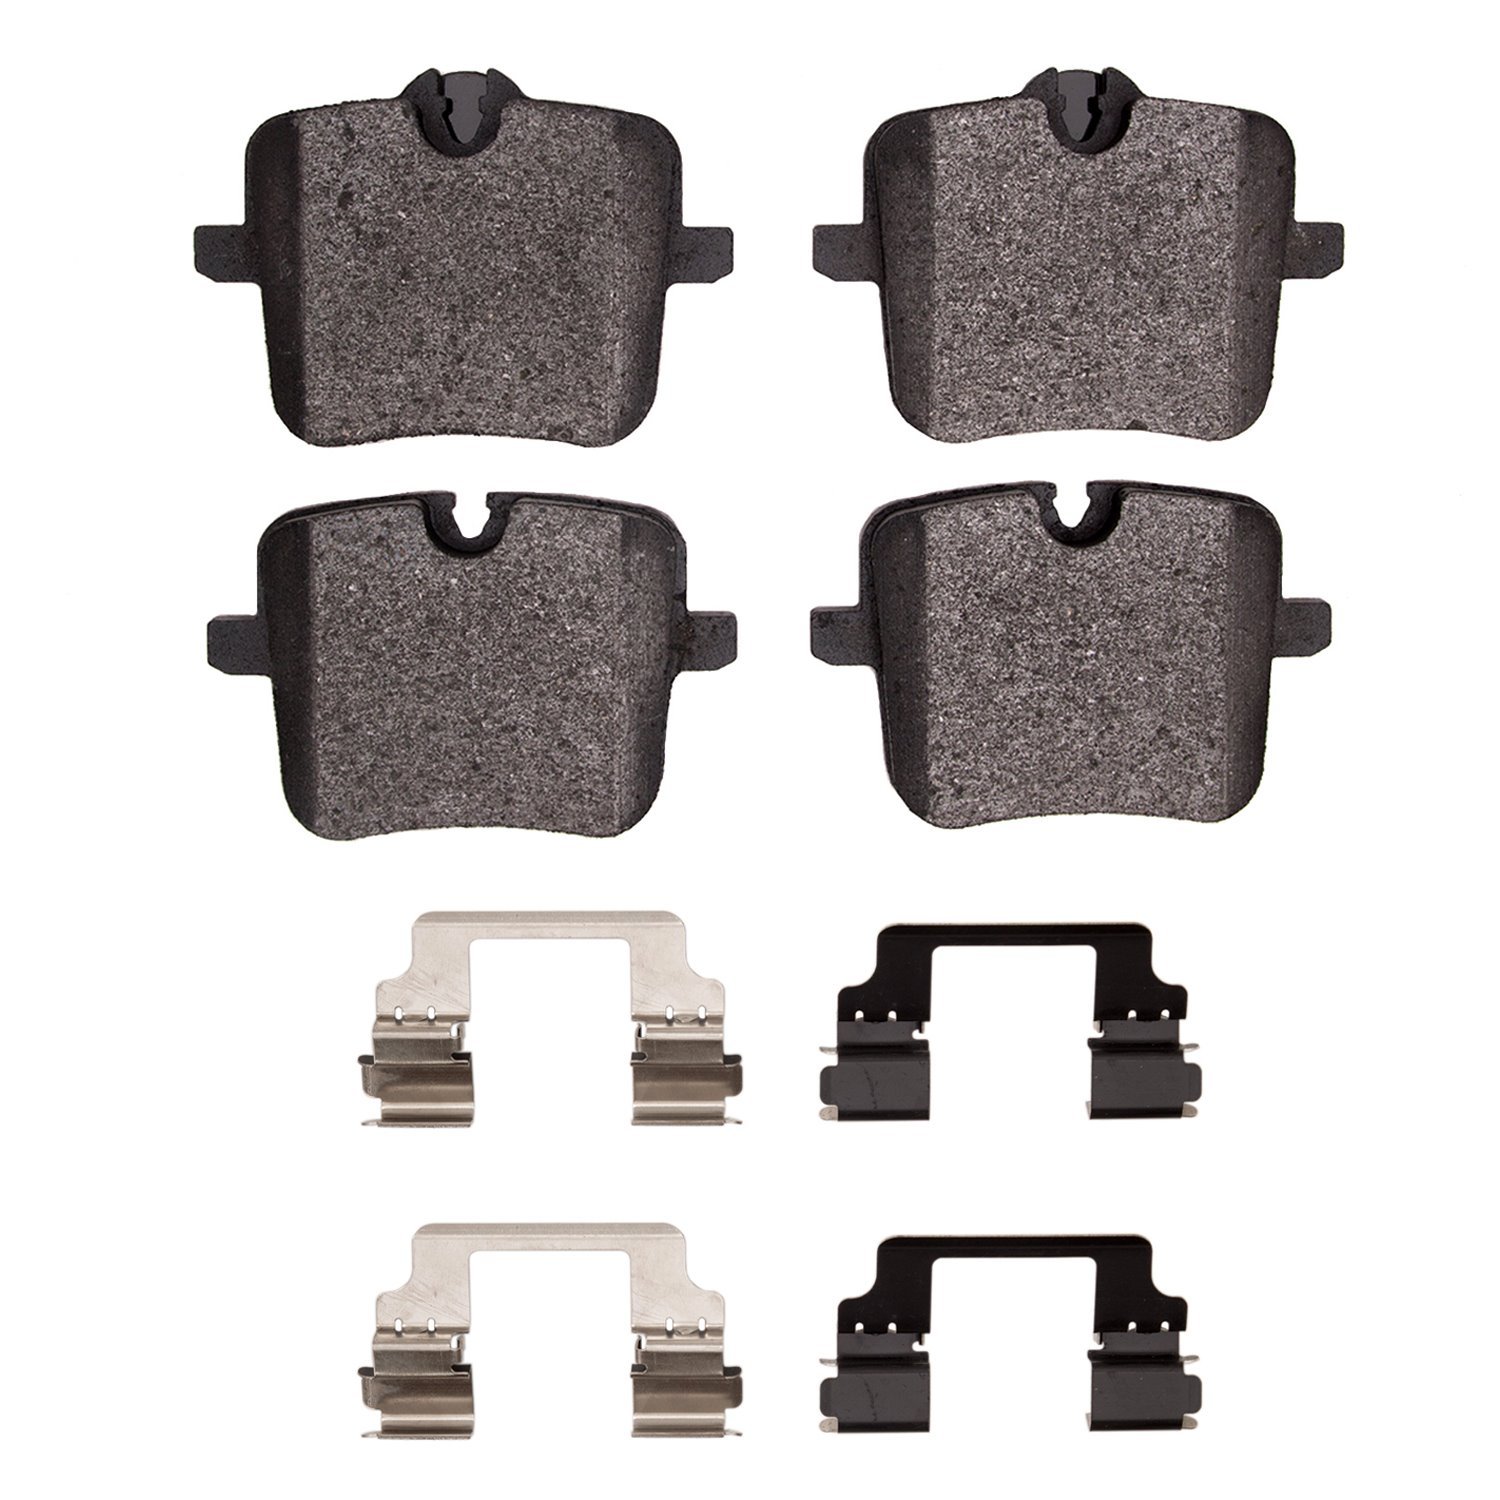 1311-2059-01 3000-Series Semi-Metallic Brake Pads & Hardware Kit, Fits Select Multiple Makes/Models, Position: Rear